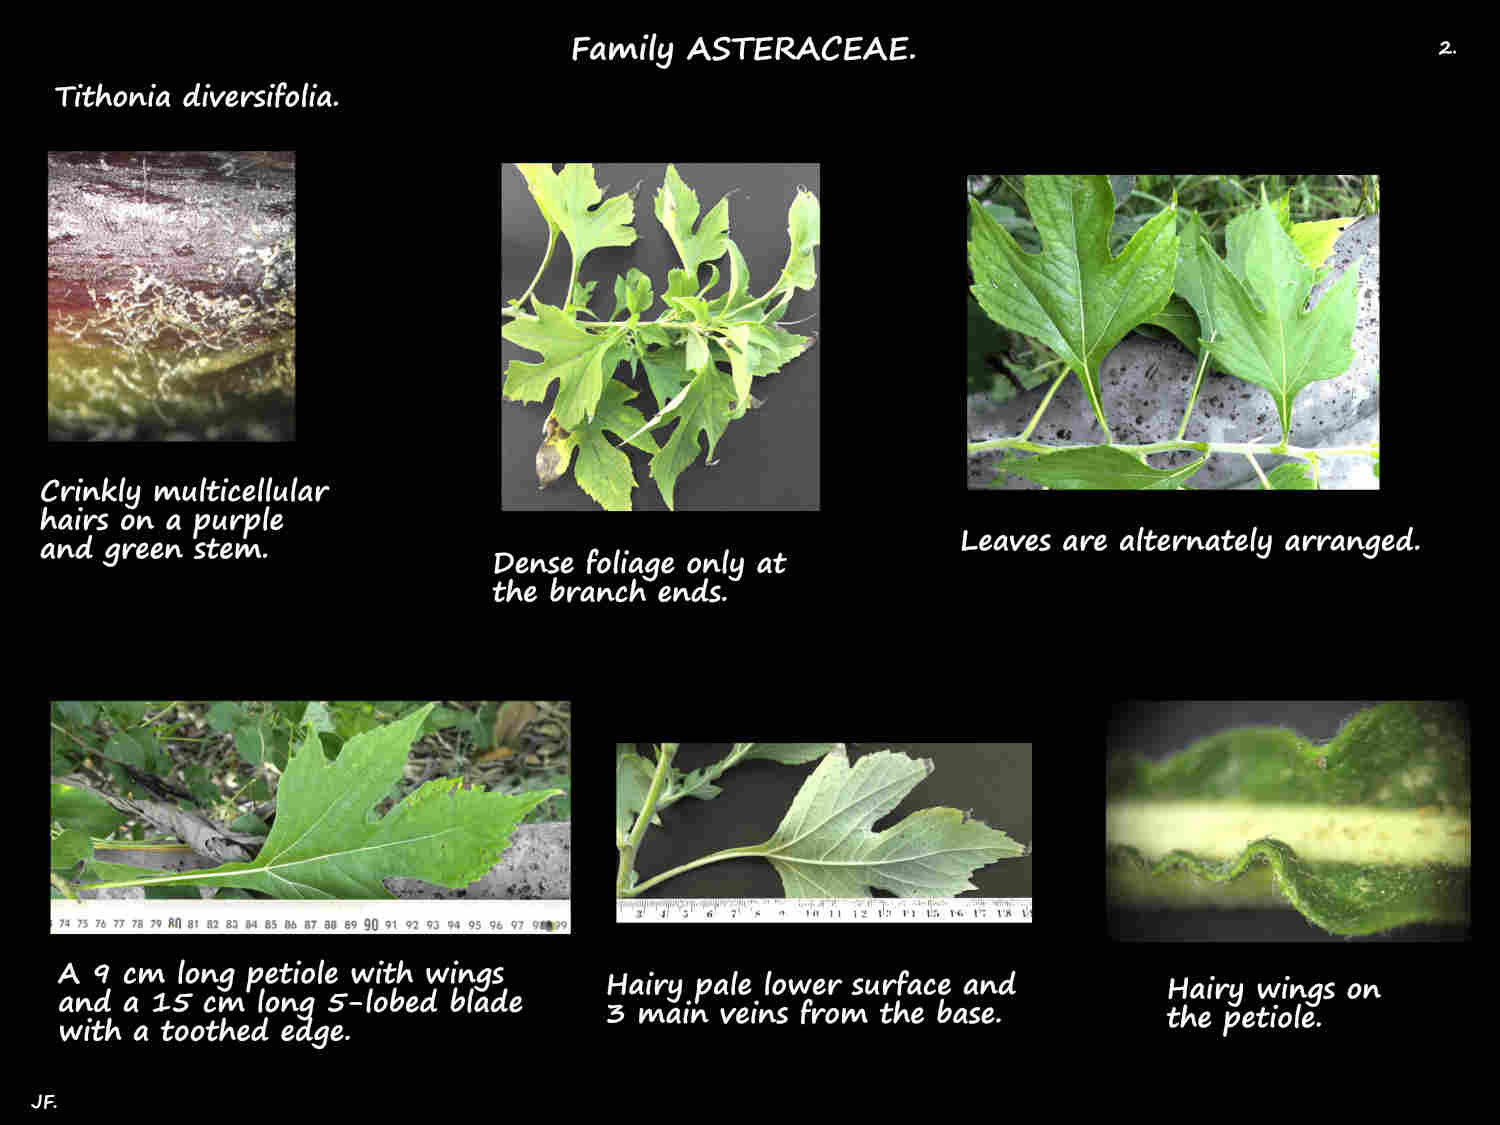 2 Tithonia diversifolia leaf arrangement